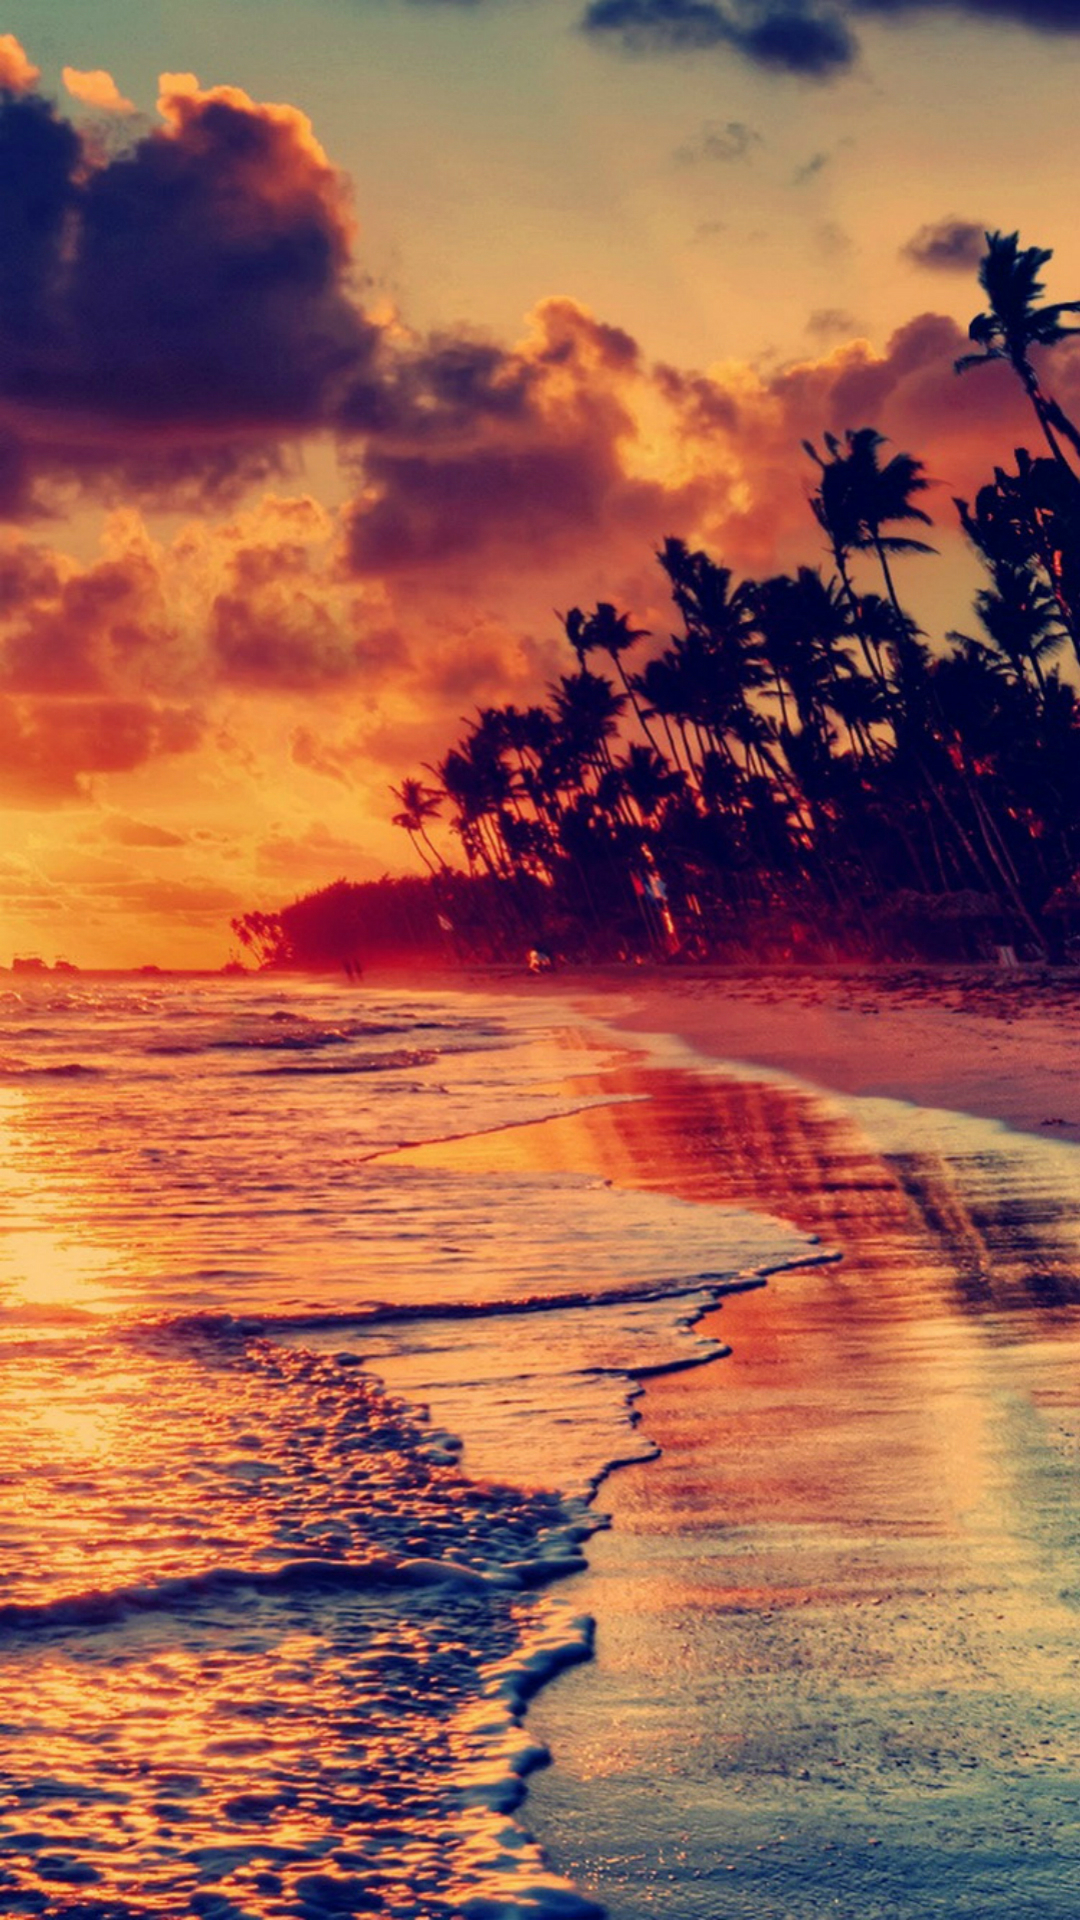 Nature Fire Sunset Beach iPhone 8 Wallpaper Free Download